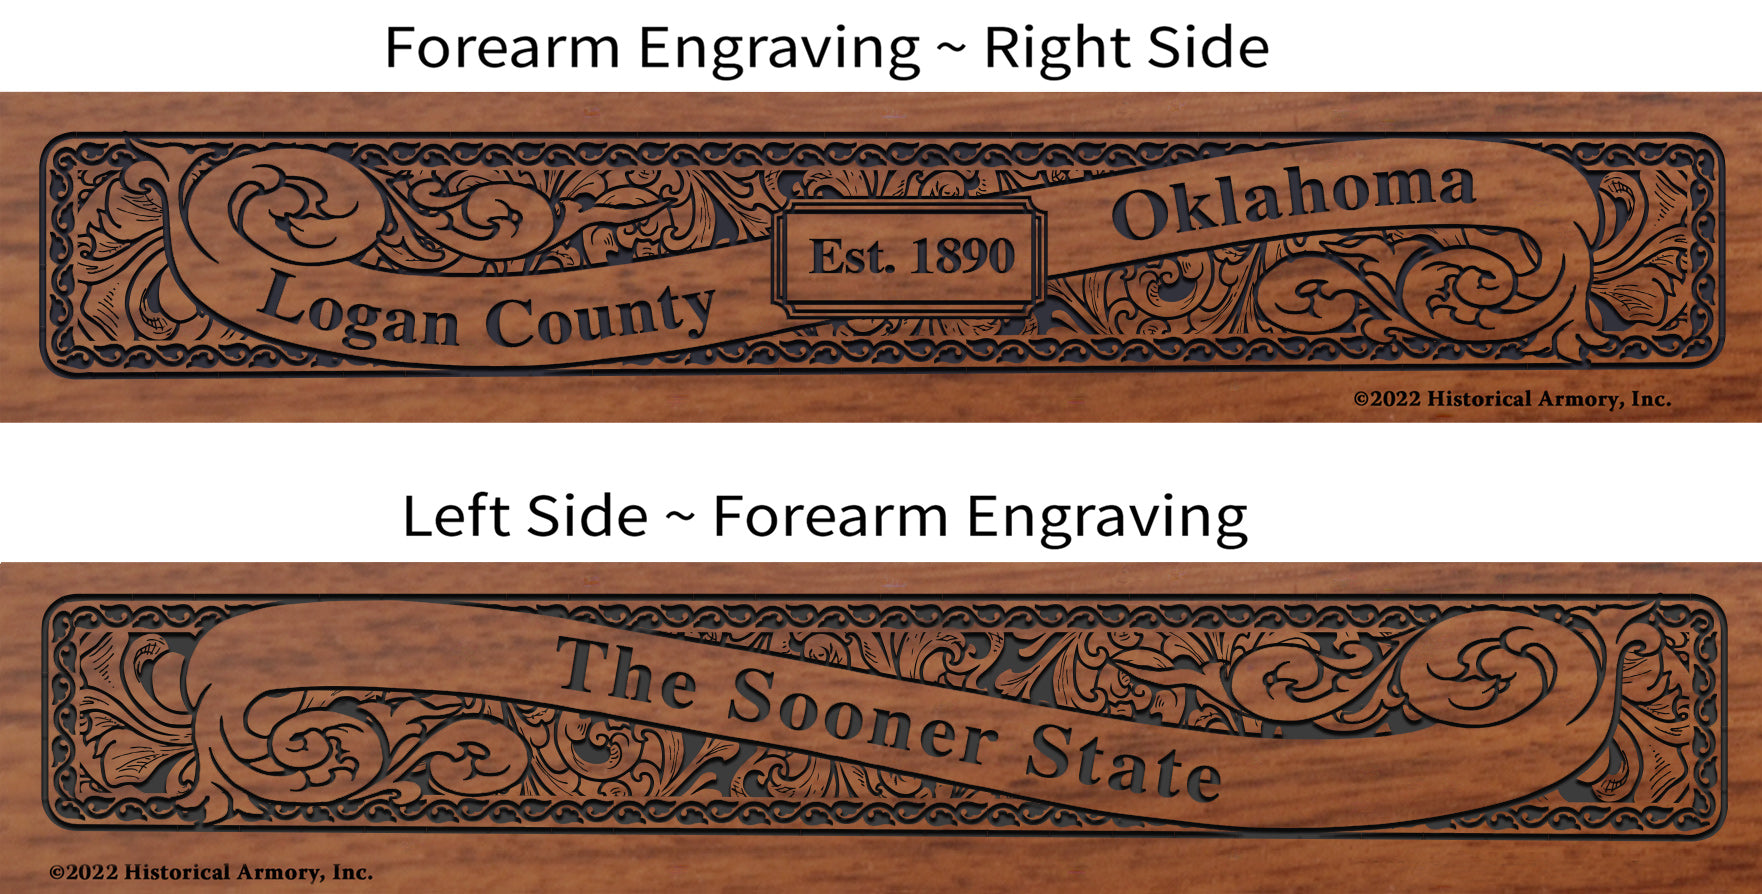 Logan County Oklahoma Engraved Rifle Forearm